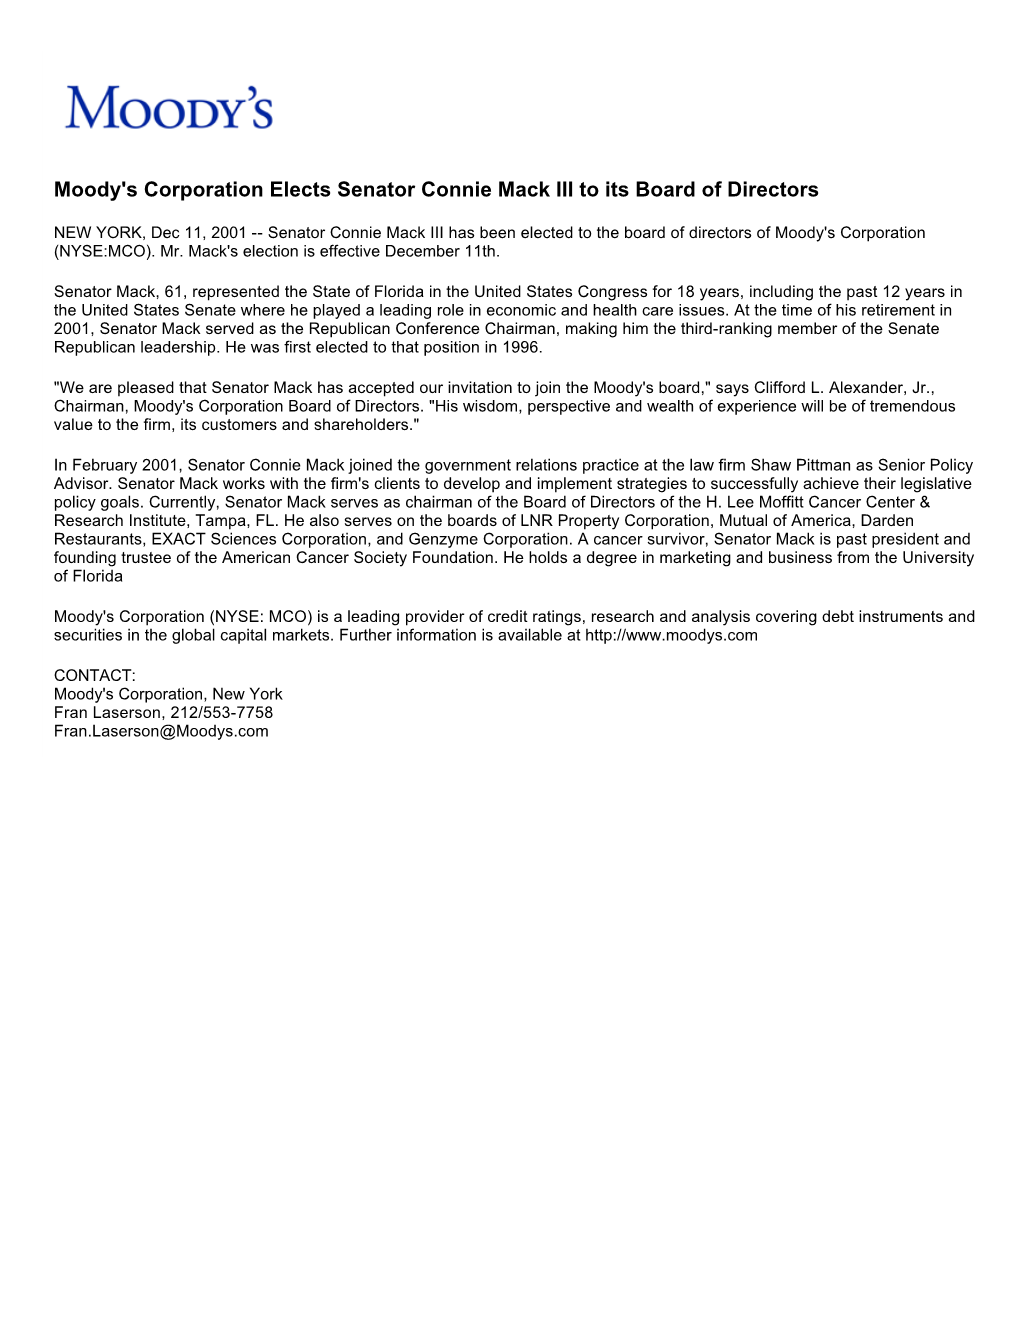 Moody's Corporation Elects Senator Connie Mack III to Its Board of Directors